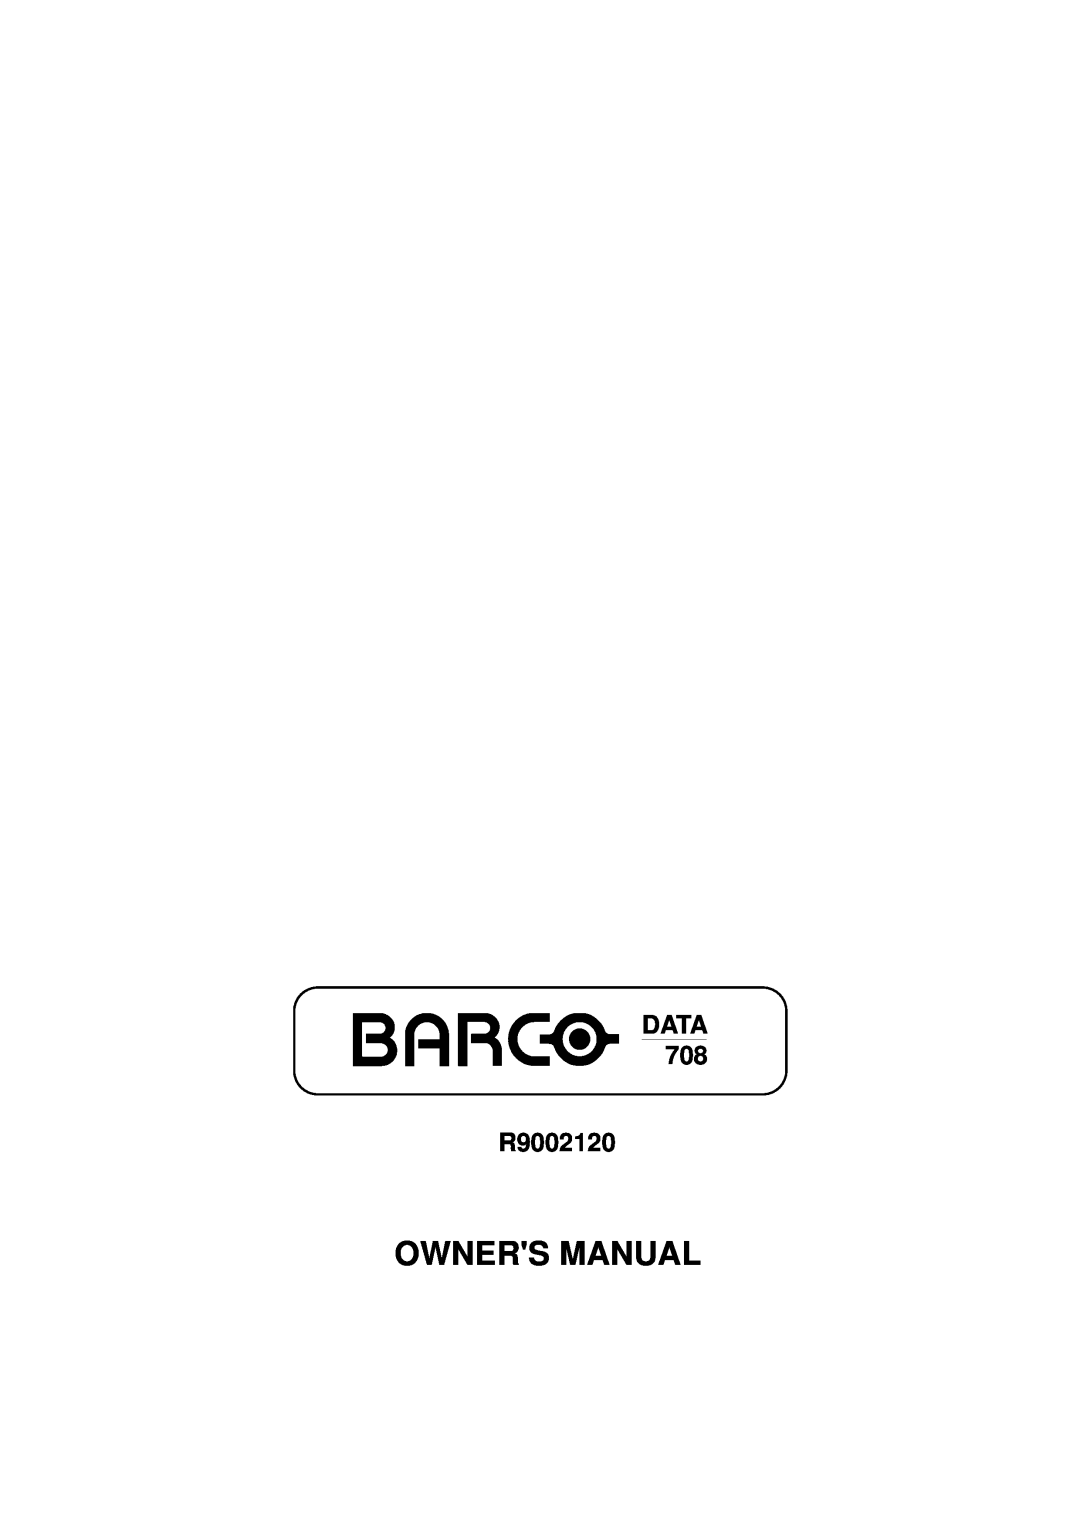 Barco R9002120 manual Data 